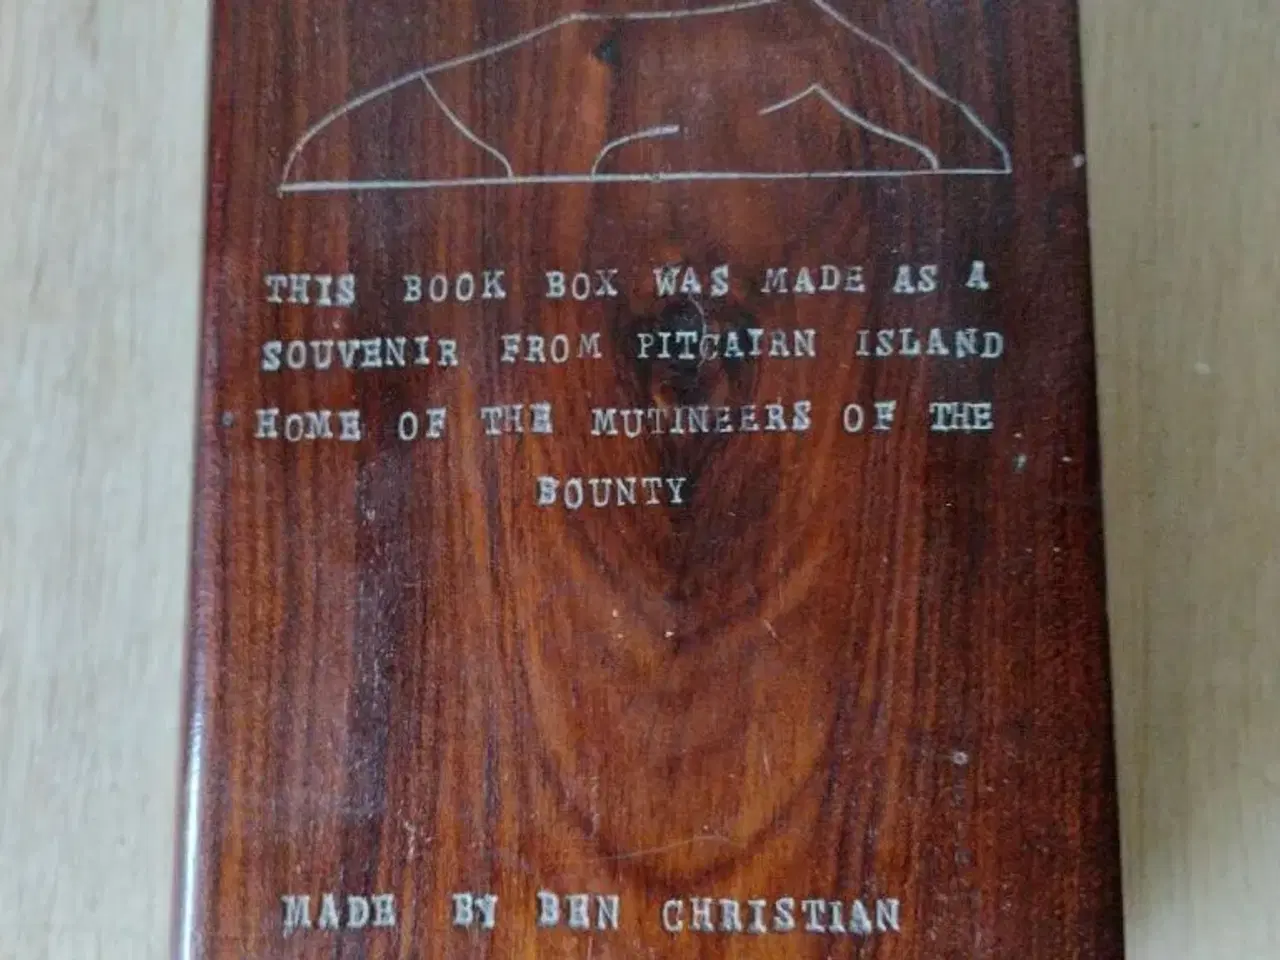 Billede 1 - Bog æske, Pitcairn Island.